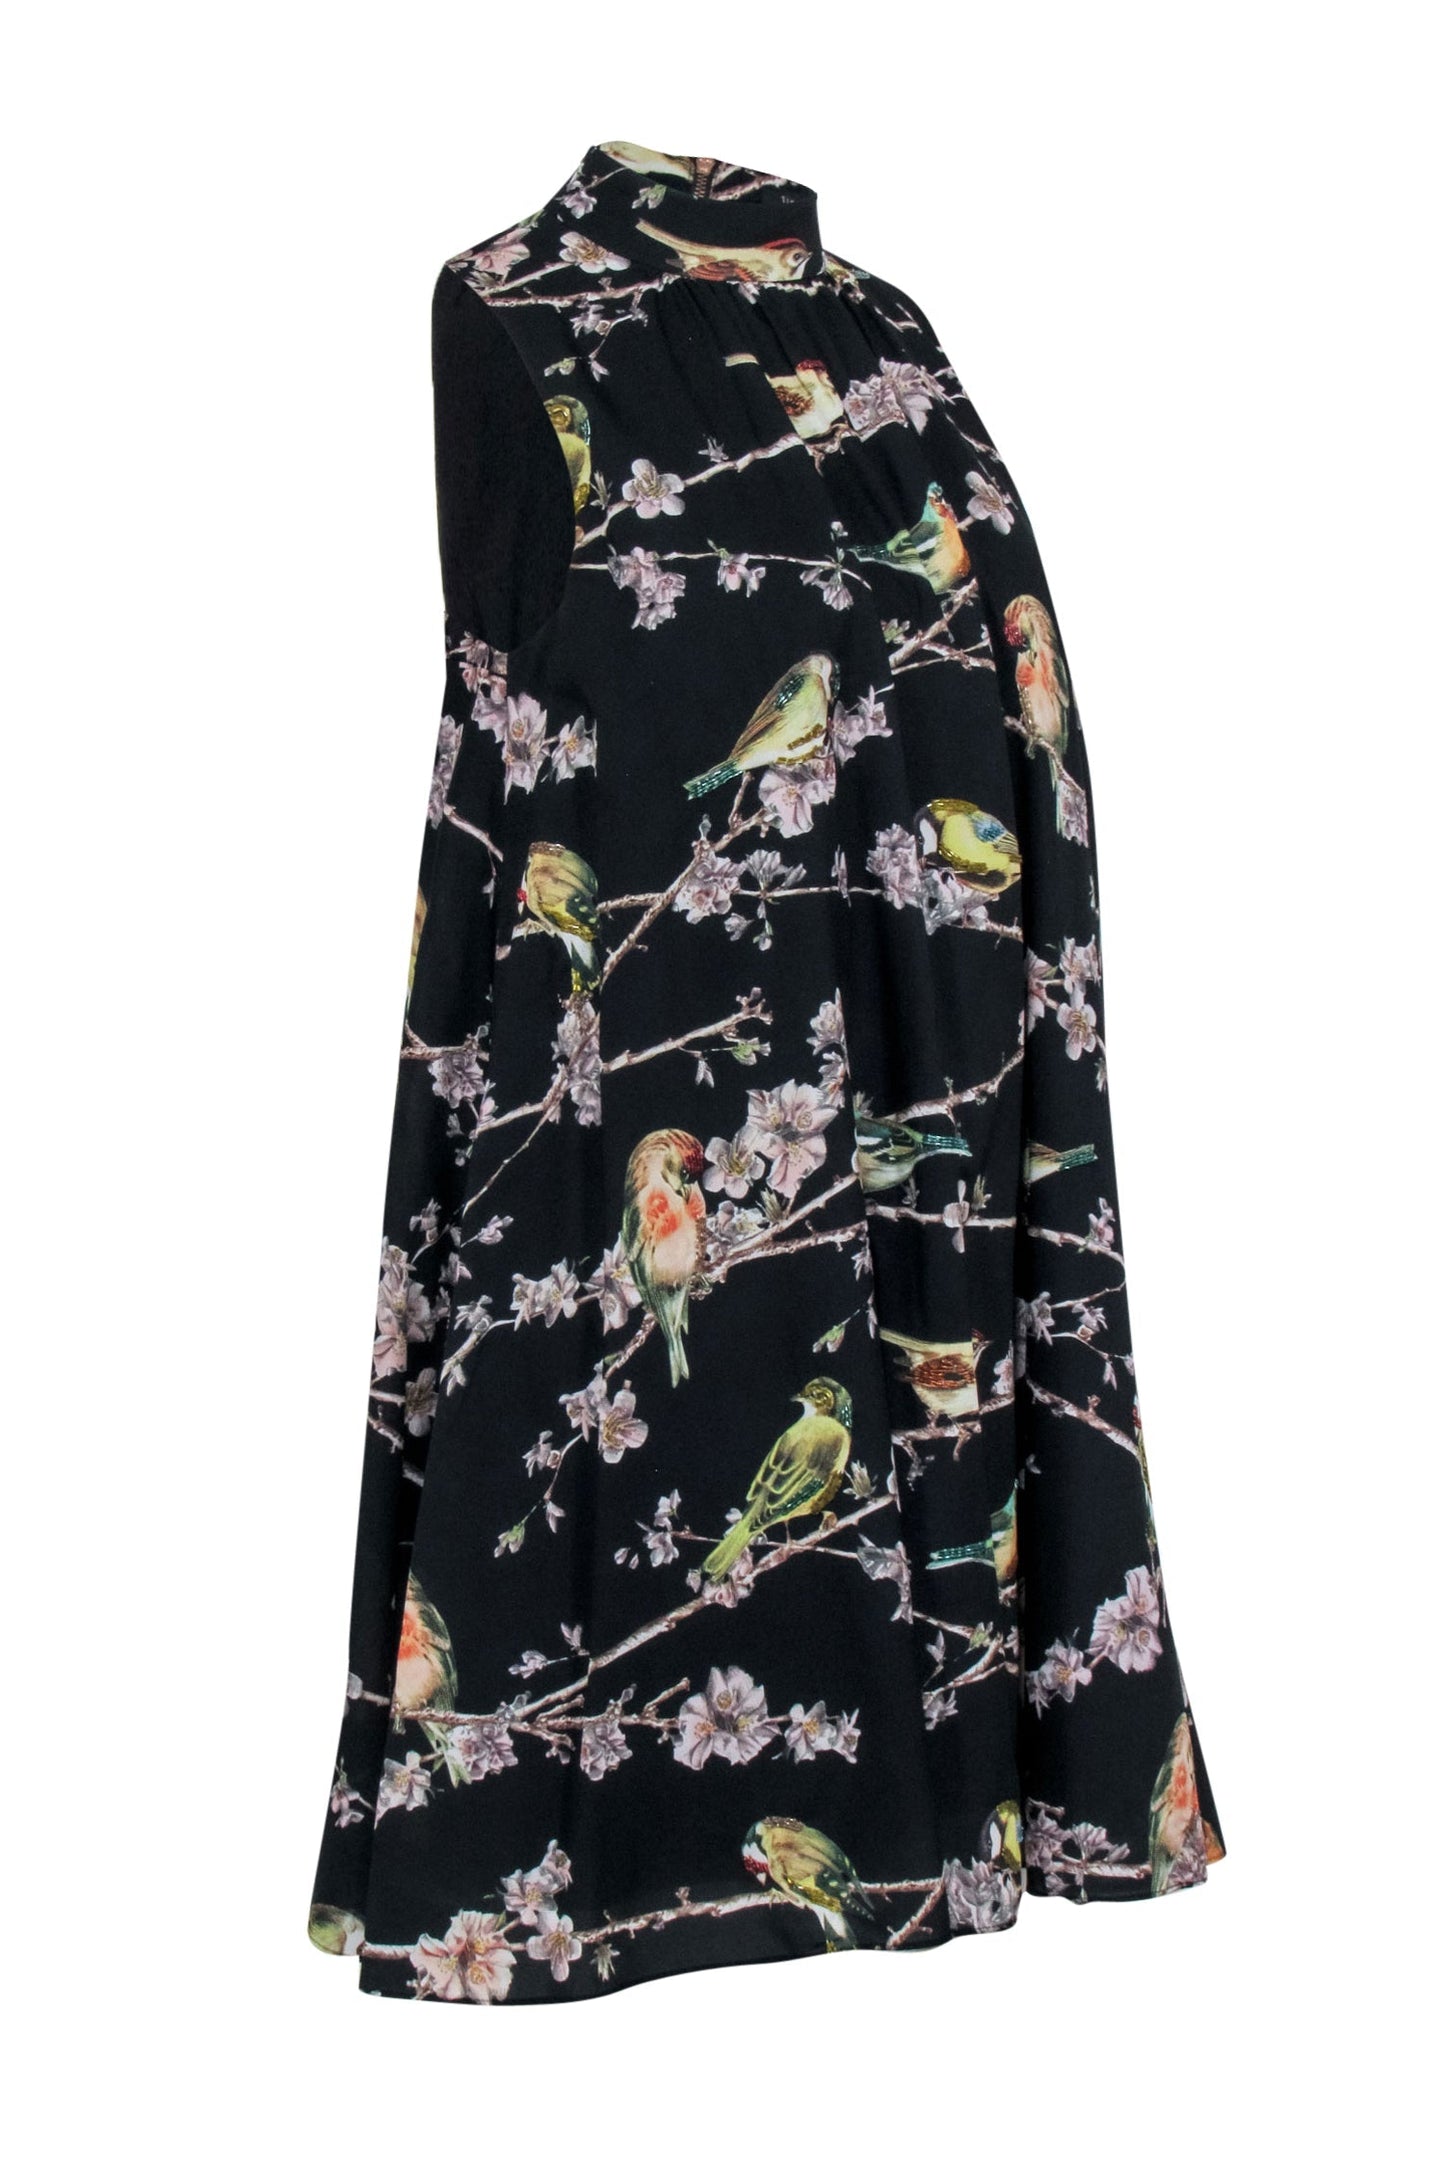 Ted Baker - Black w/ Bird & Floral Print Detail Dress Sz 4